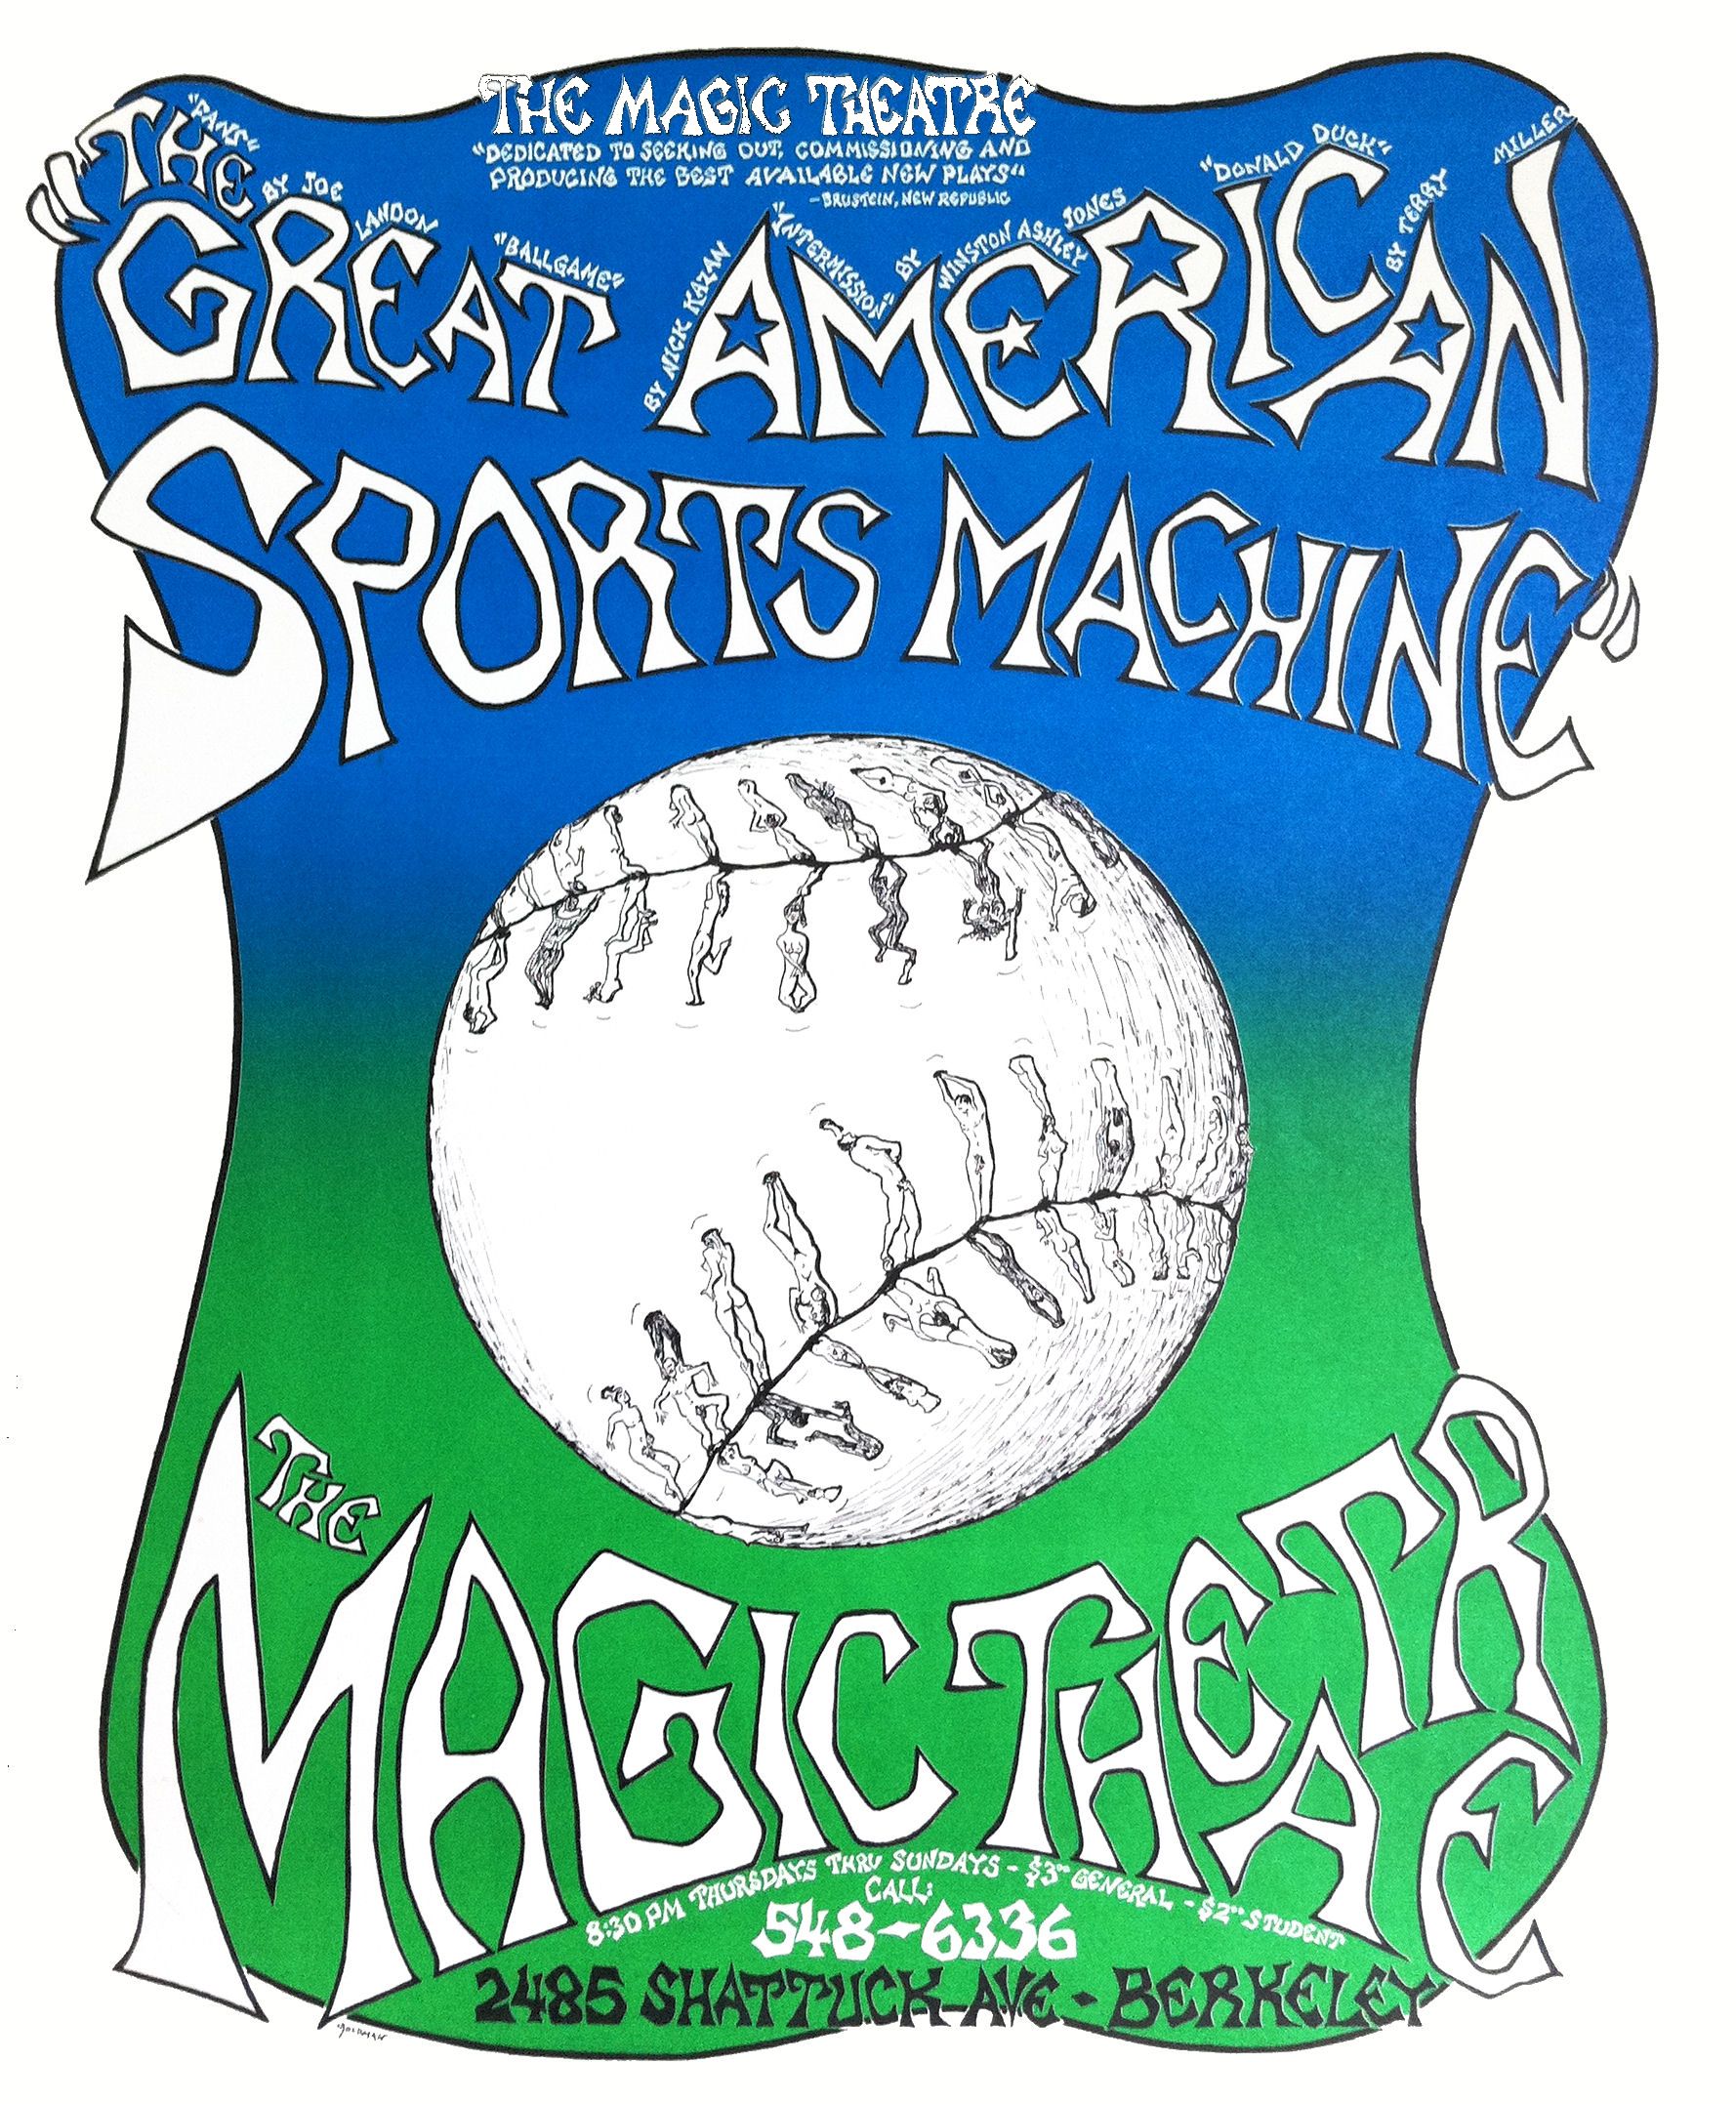 MT Poster Great Amer Sports Machine.jpg